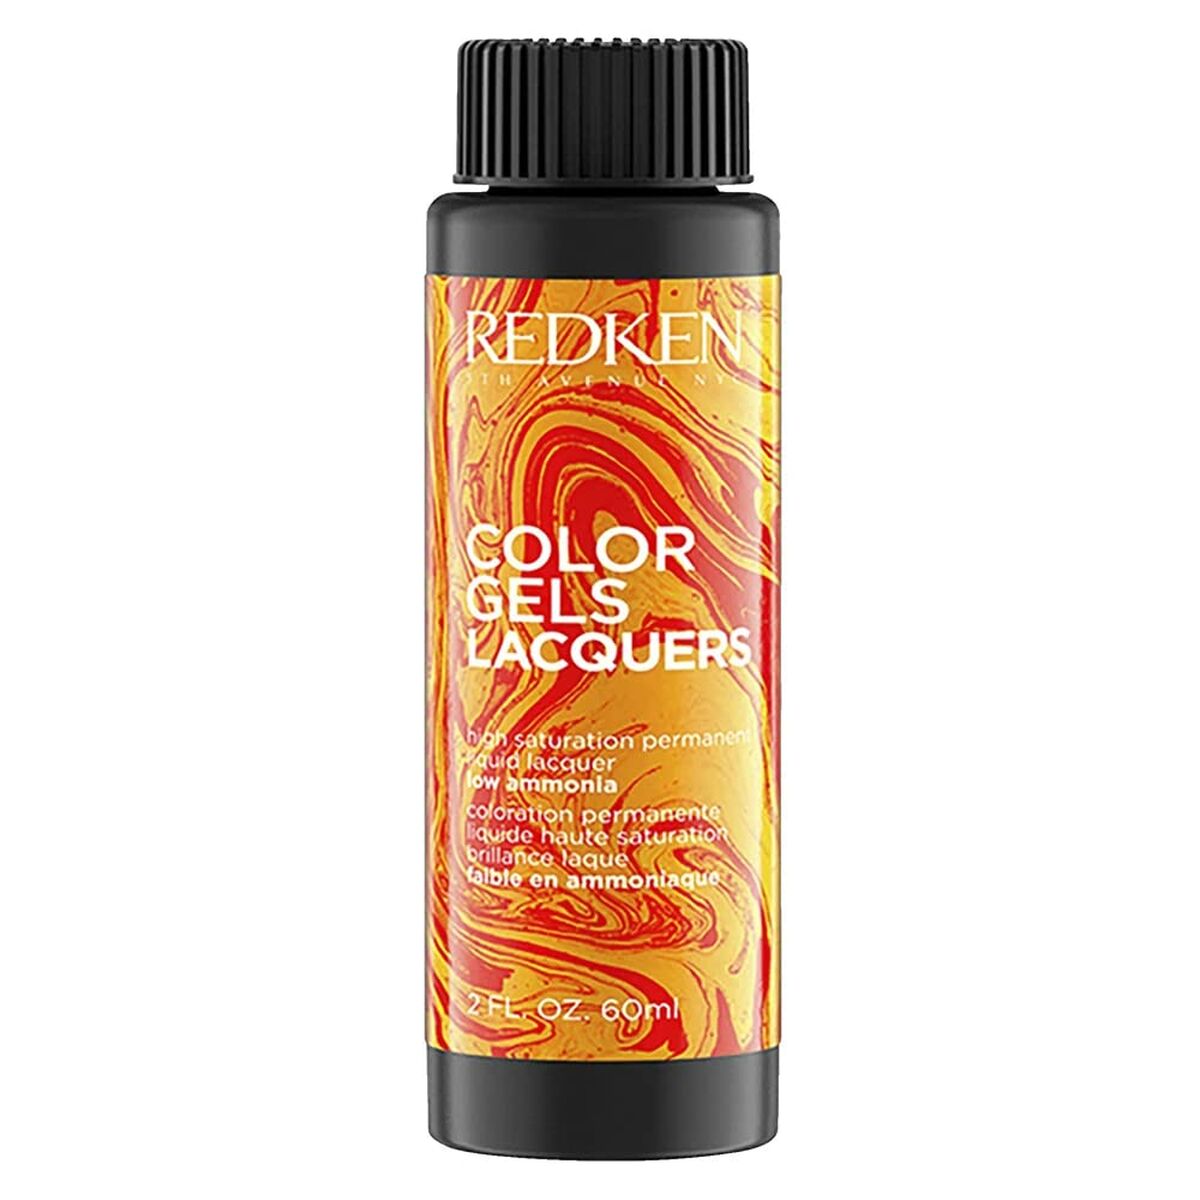 Kaufe Dauerfärbung Redken Color Gel Lacquers 6RR-blaze 3 x 60 ml Fluid bei AWK Flagship um € 54.00